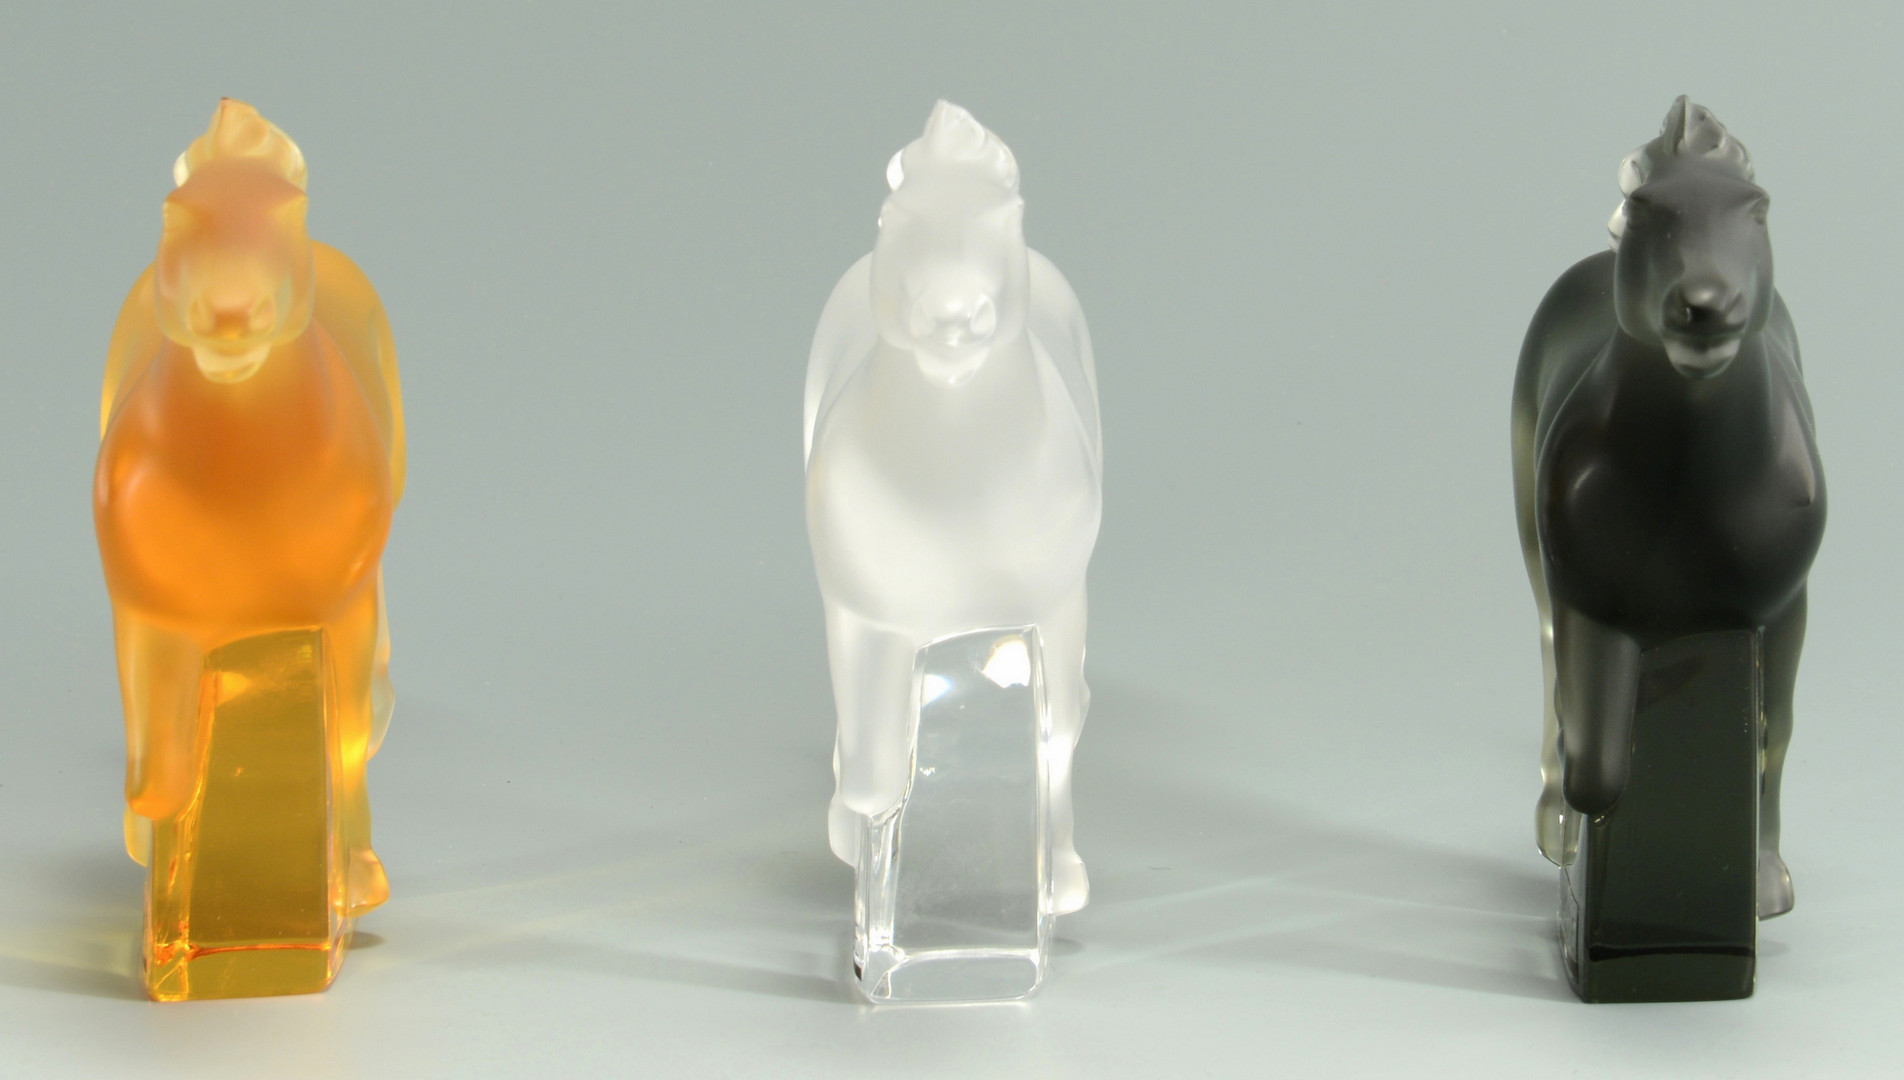 Lot 240: 3 Lalique Crystal "Kazak" Horses